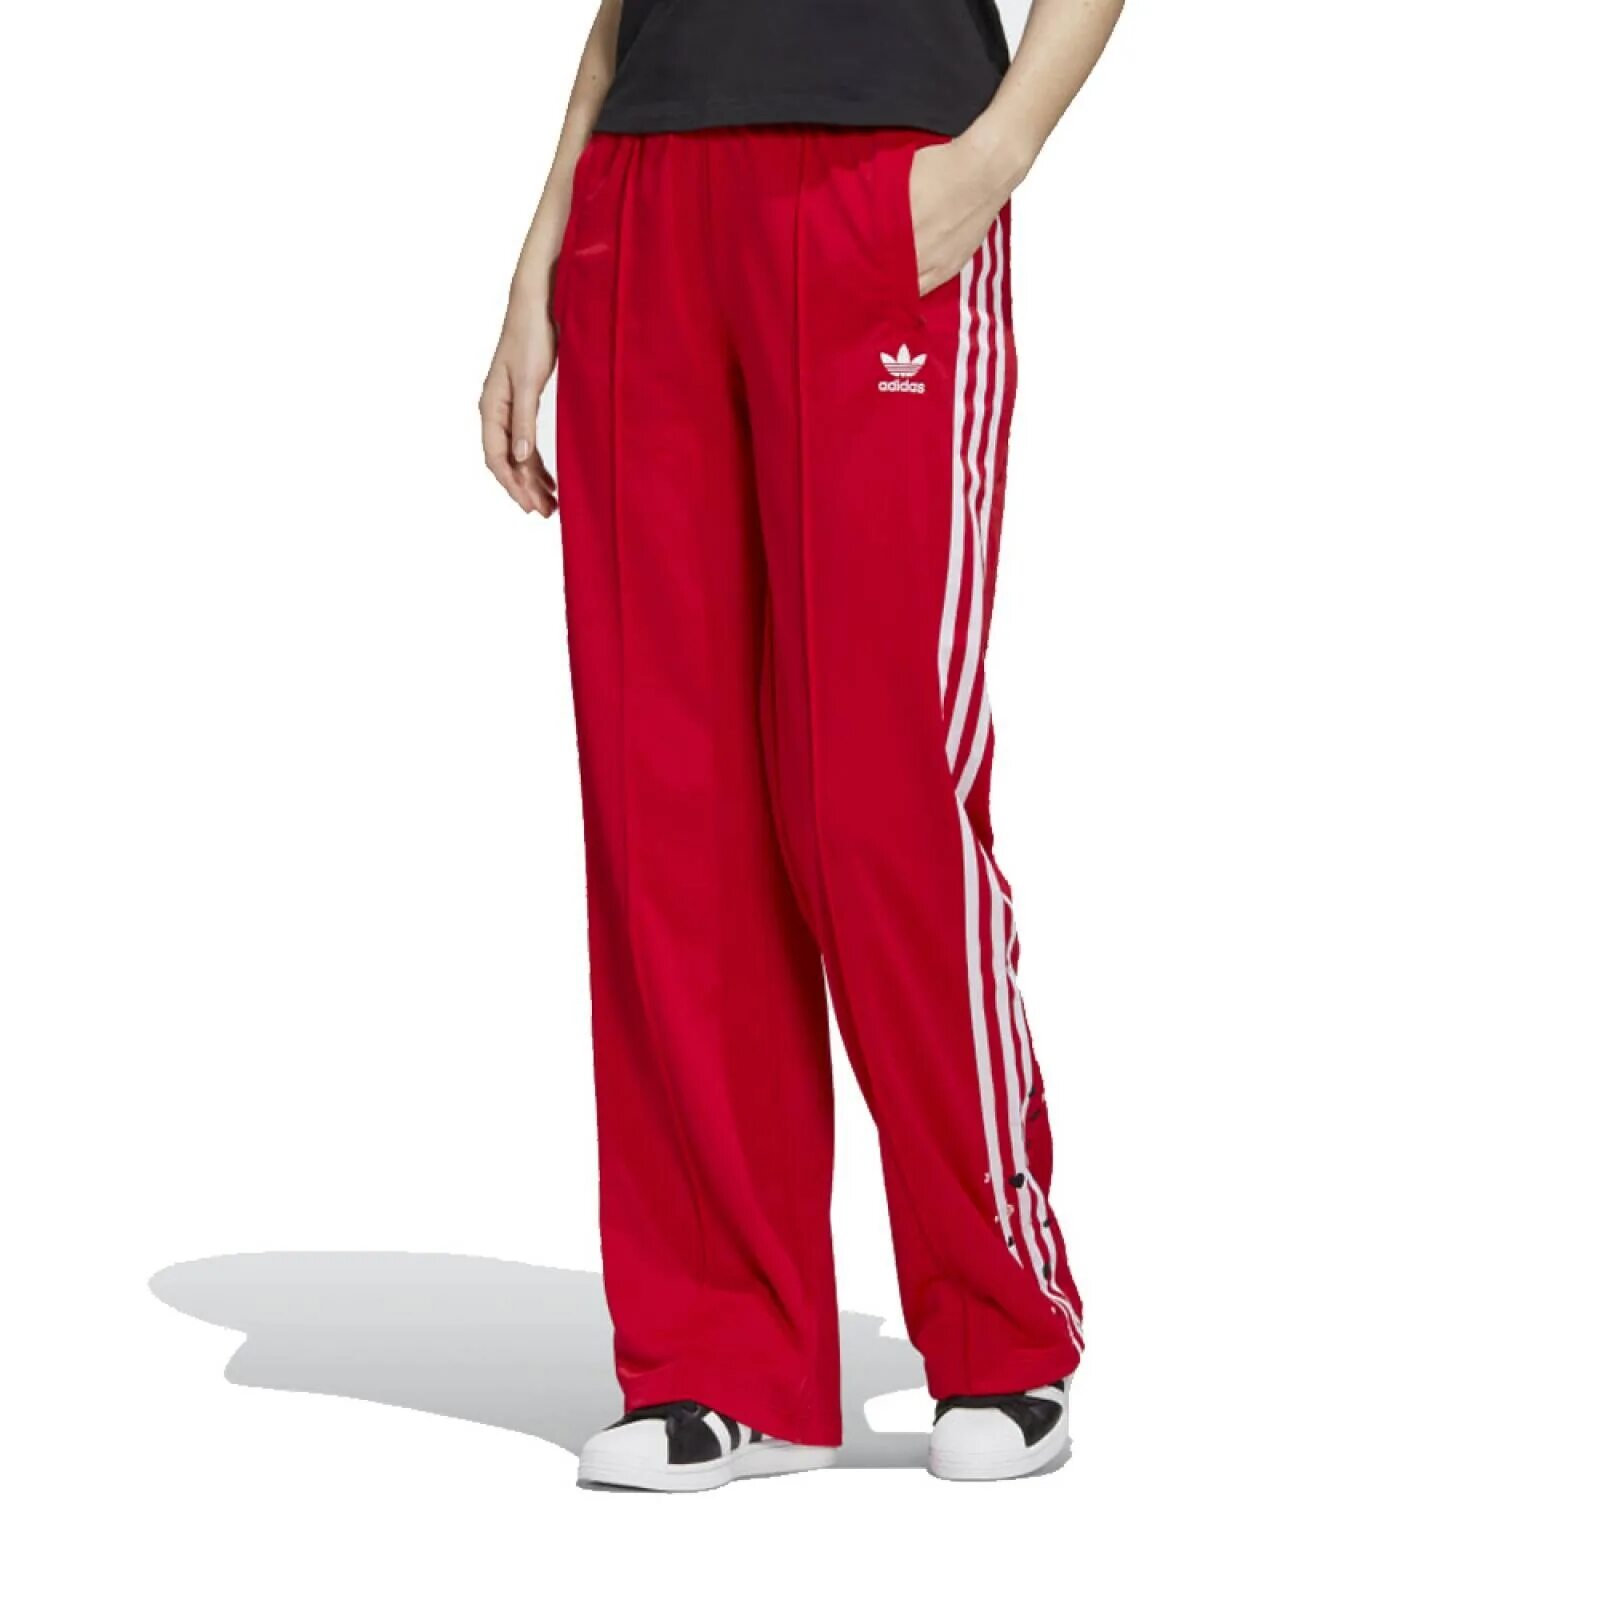 Adidas track Pants Valentines Day. Adidas Originals красные брюки. Штаны адидас клеш.